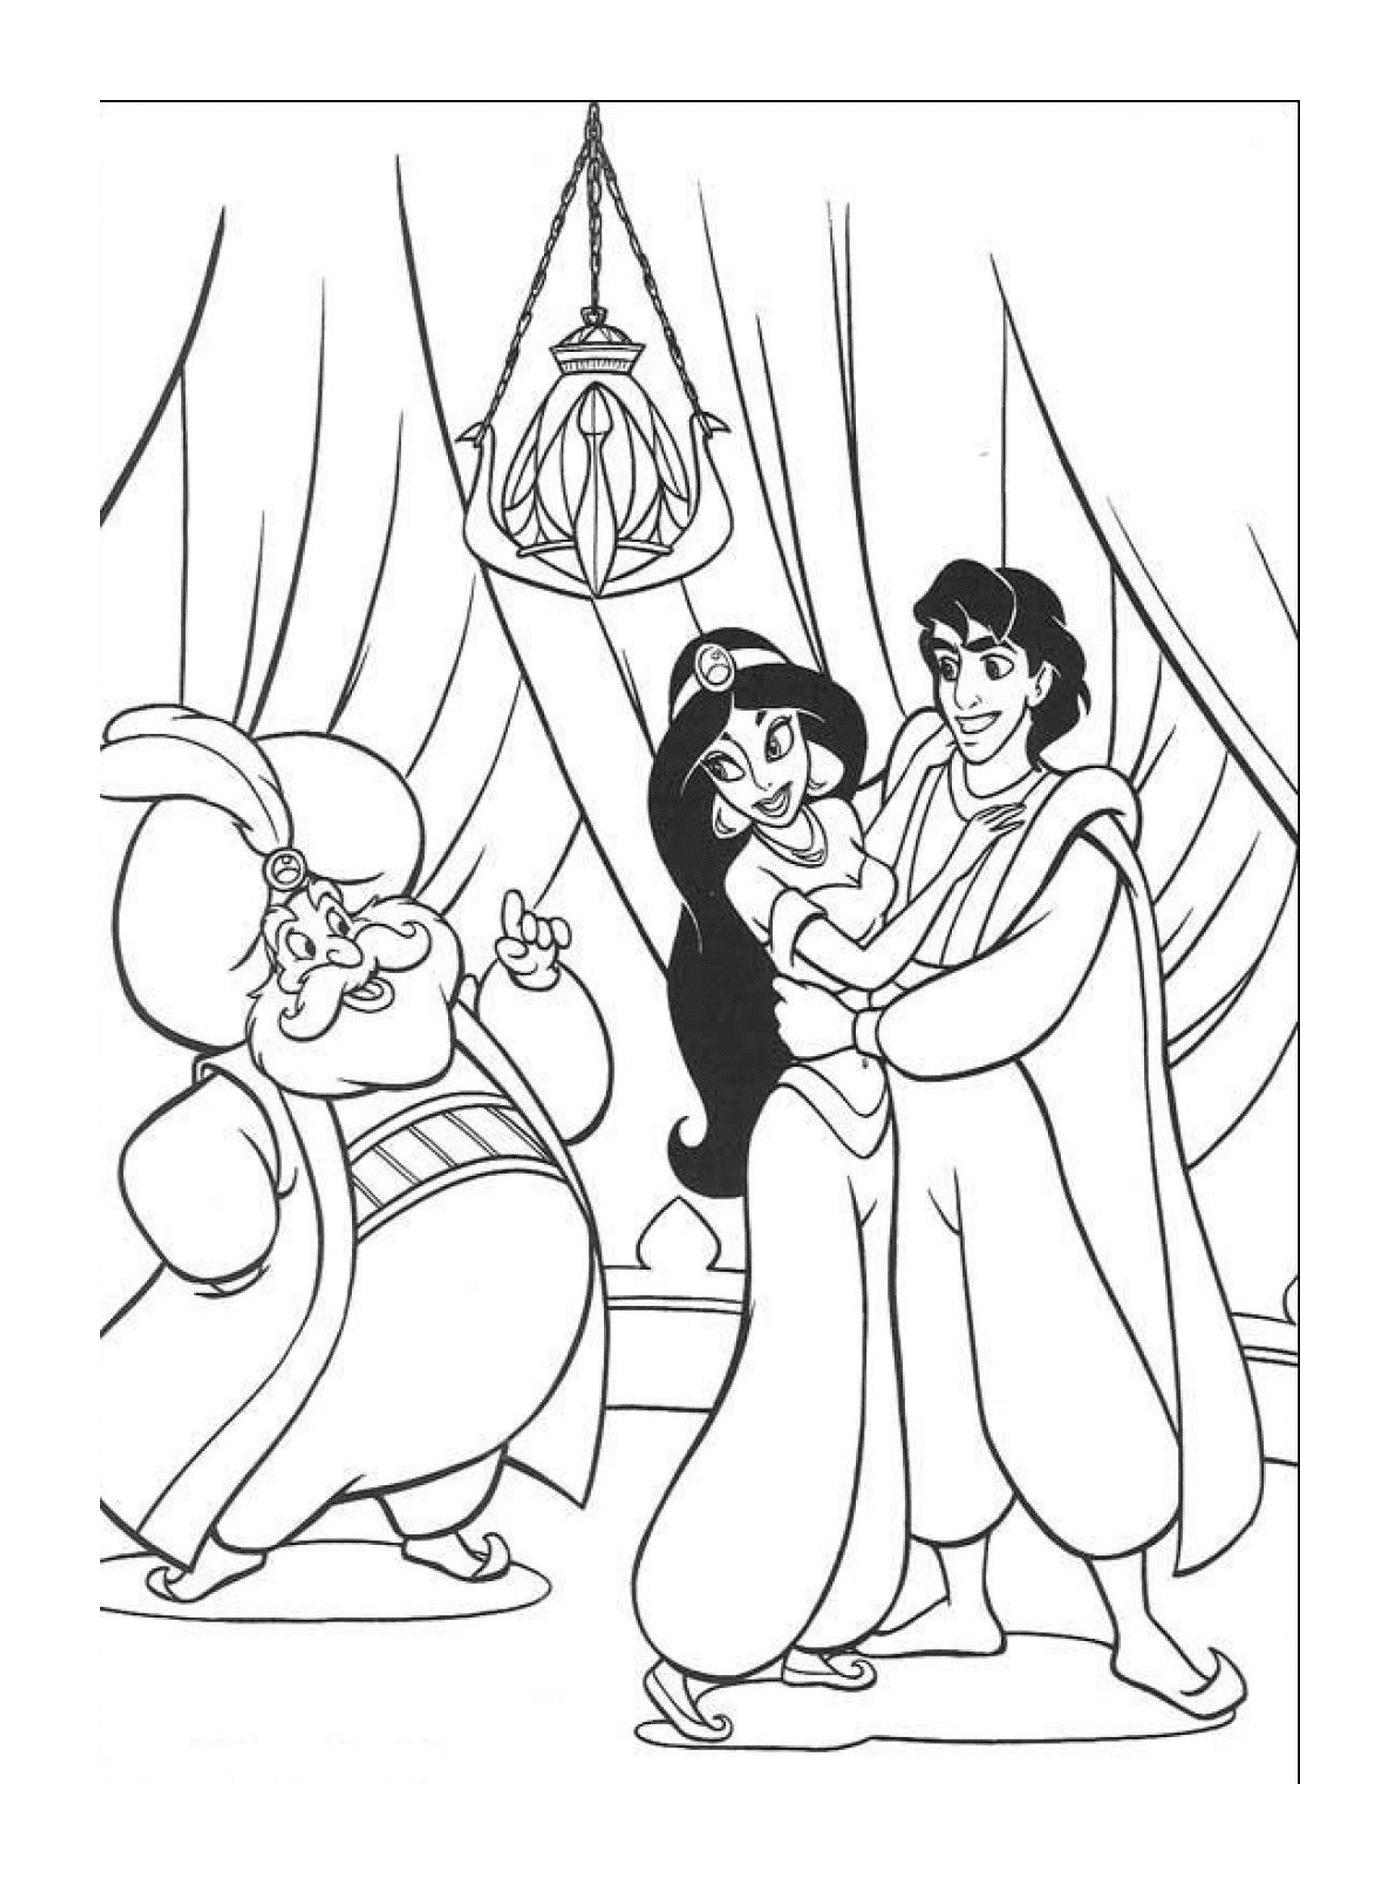  Aladdin bailando con Jasmine 